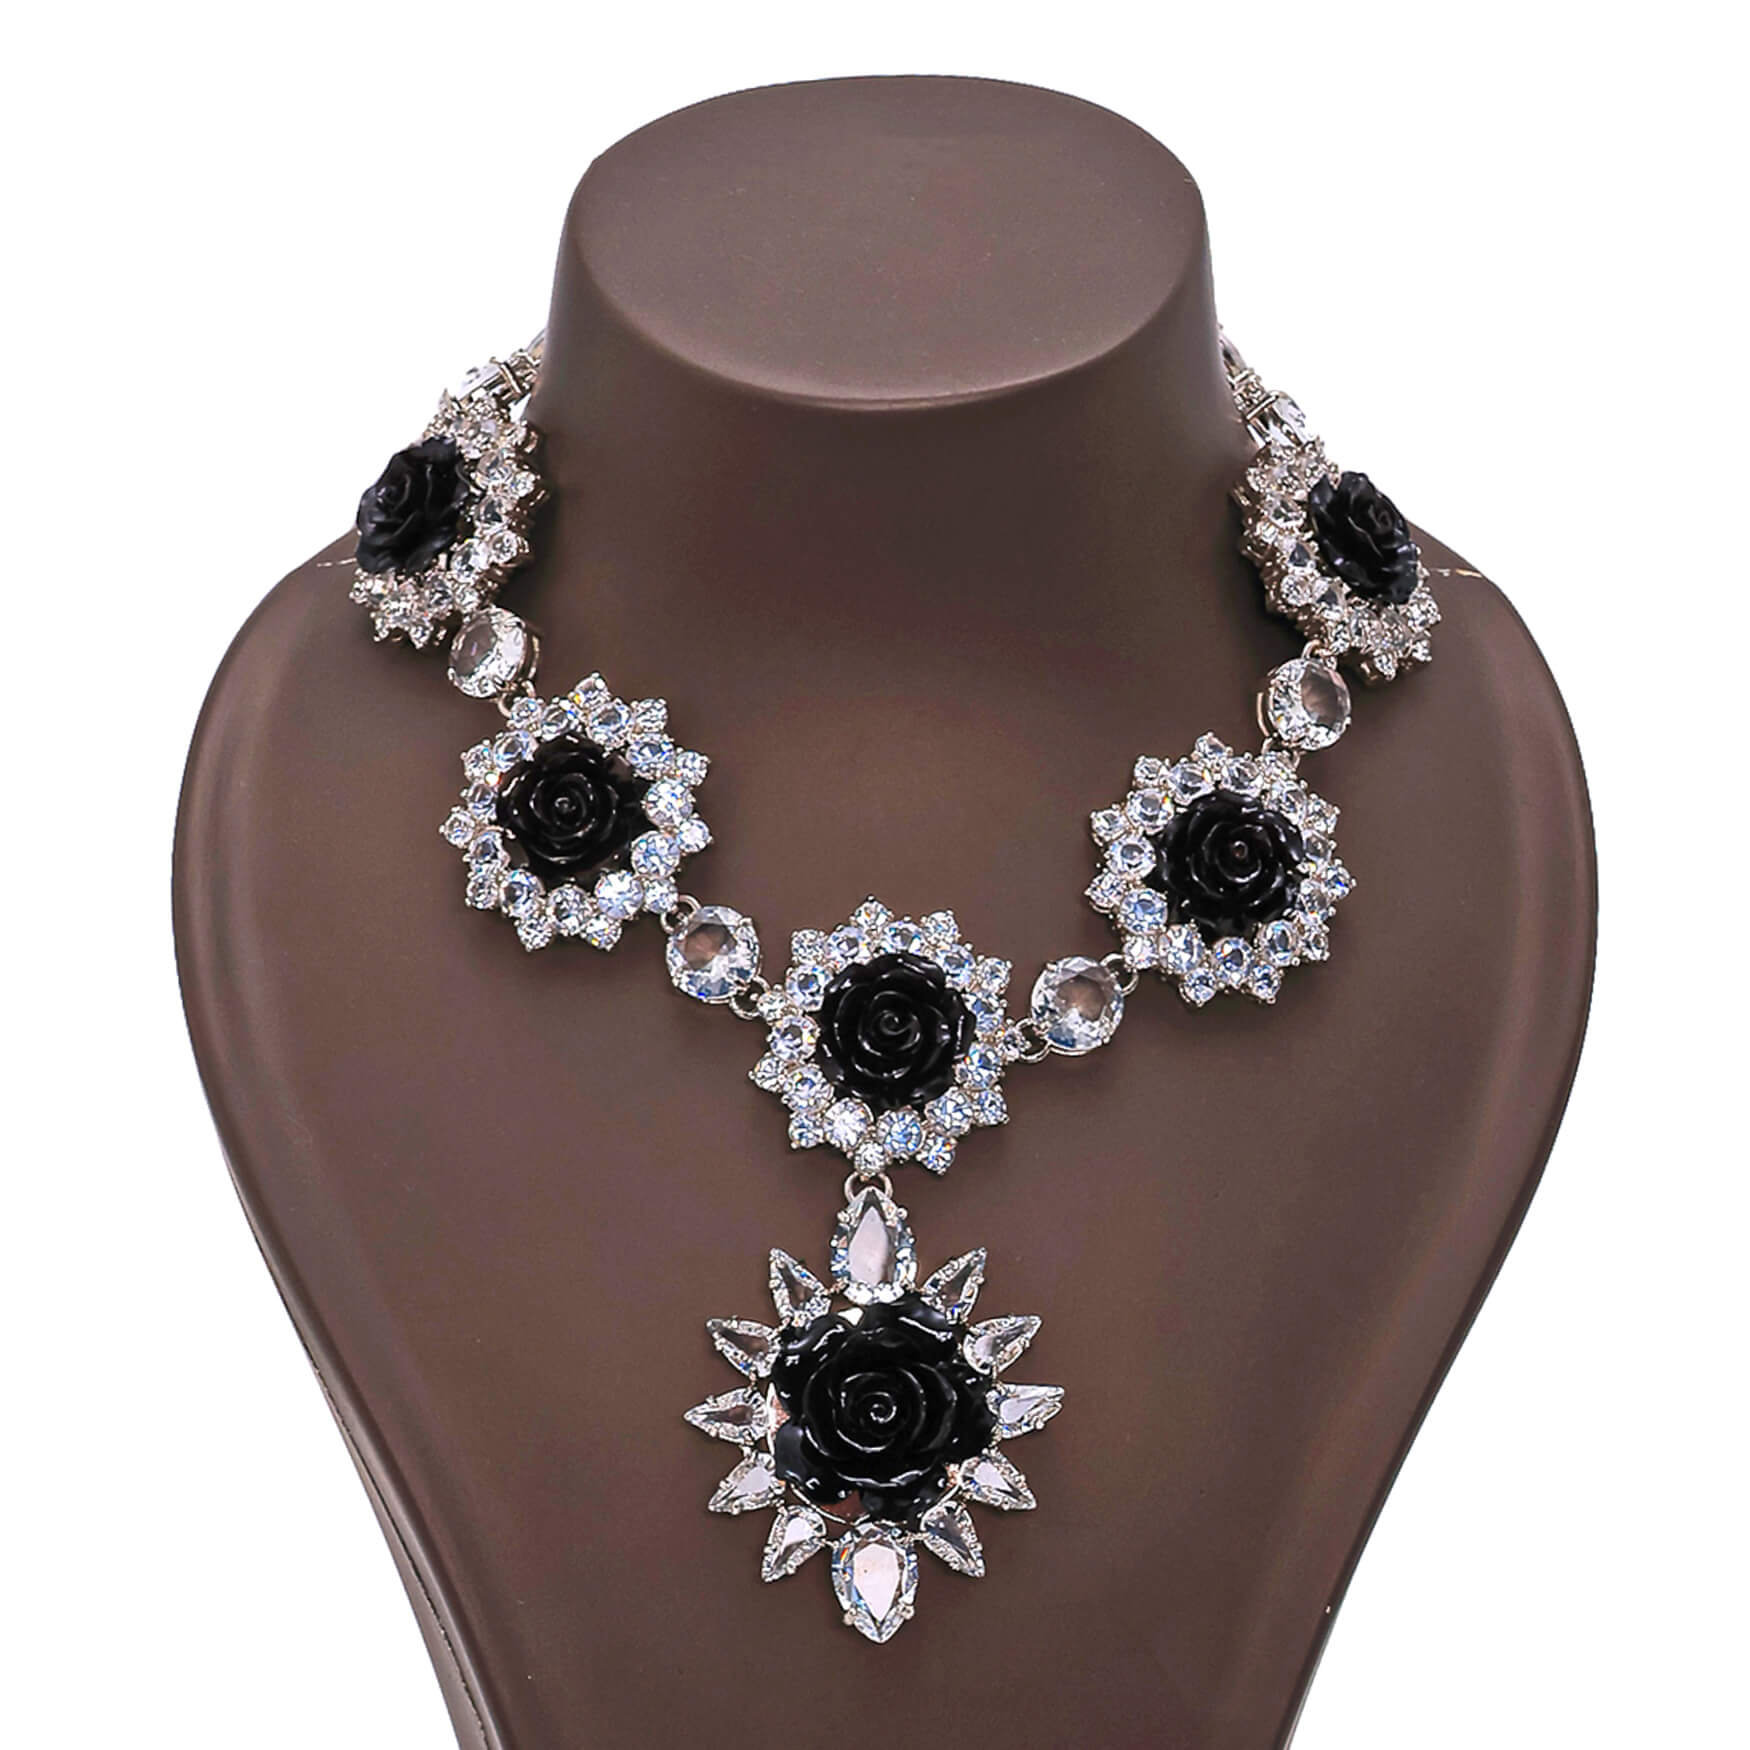 Prada - Black Floral Crystal Necklace